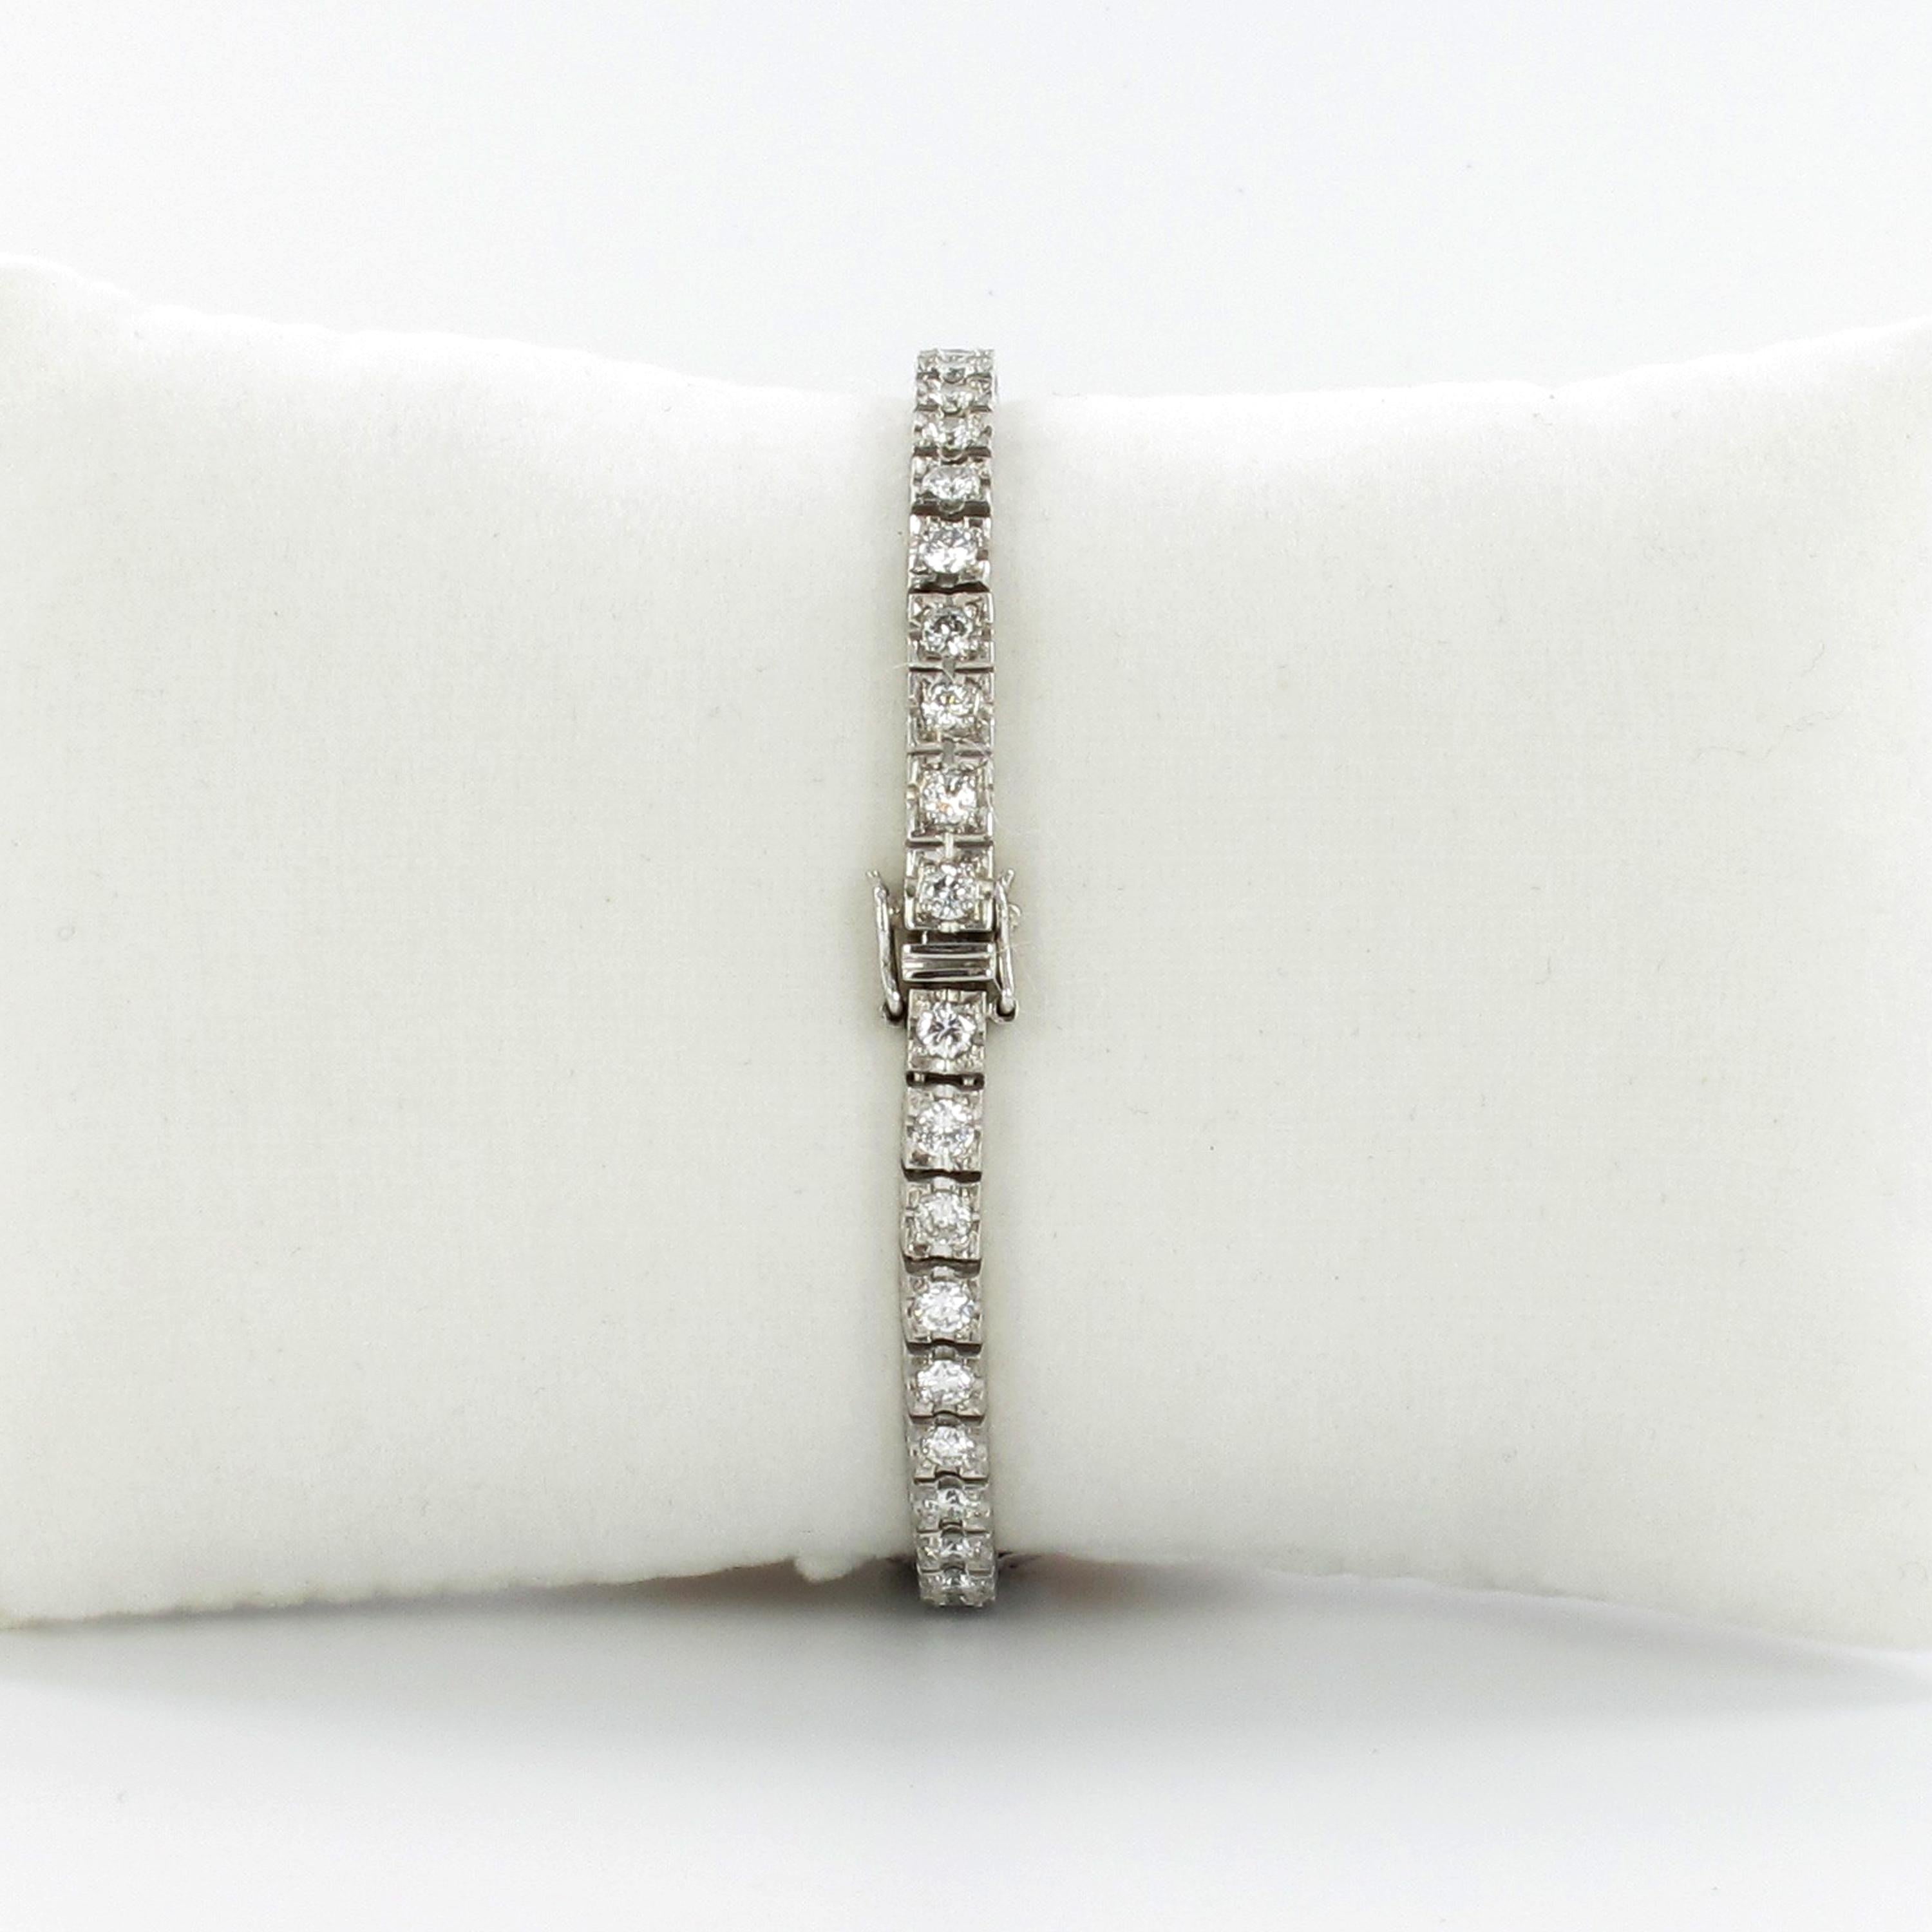 Beautiful Art Deco Style Ladies Bracelet Watch with Diamonds in Platinum 950 1